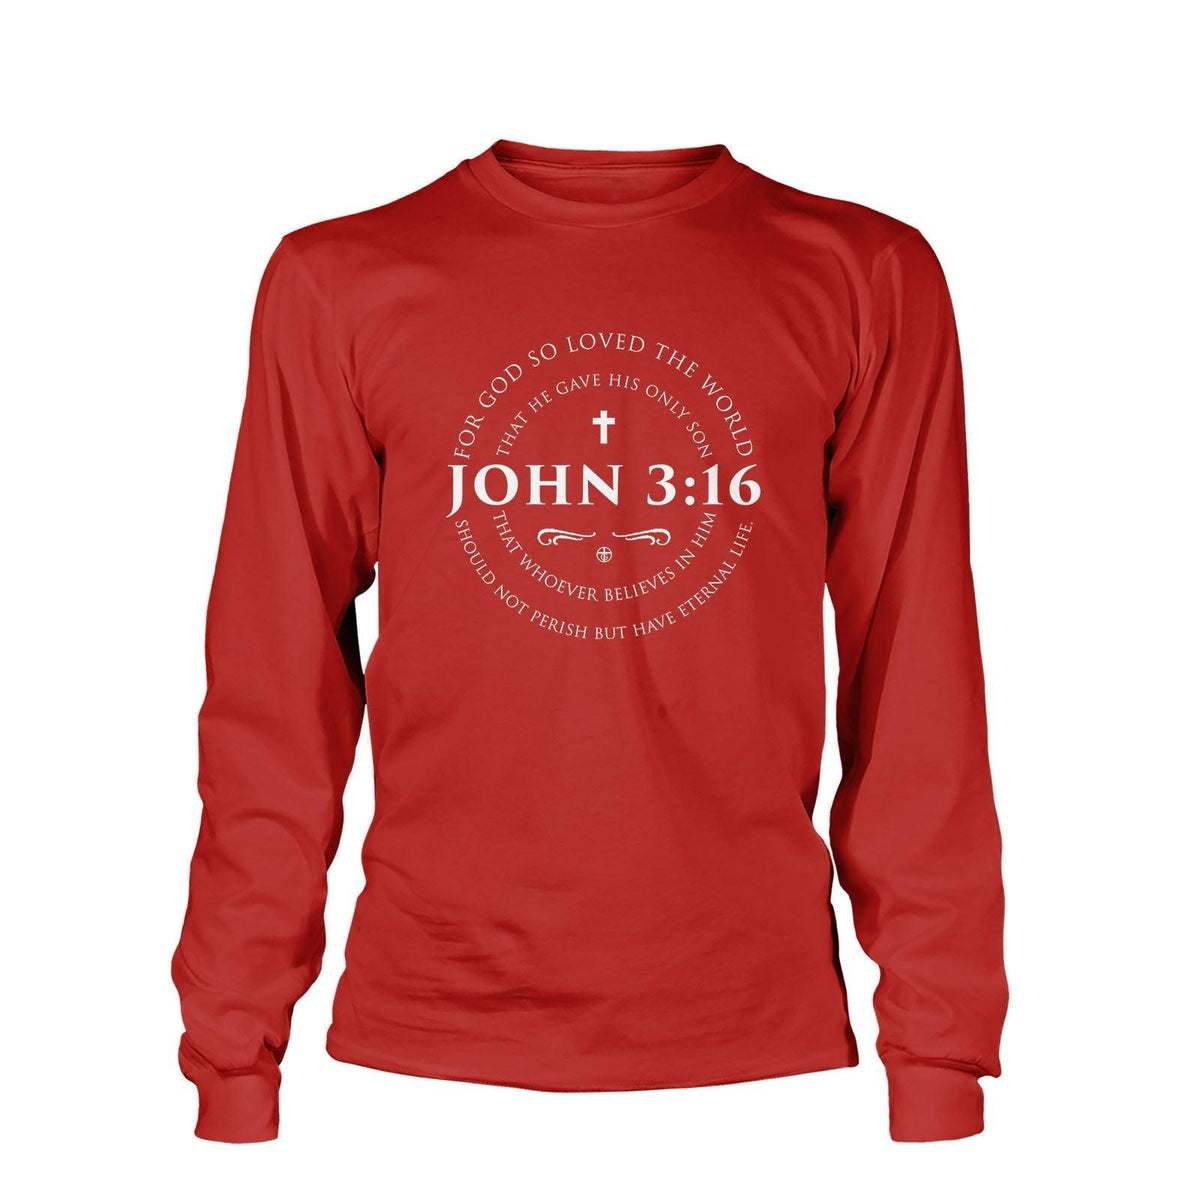 John 3:16 Long Sleeve T-Shirt - Our True God